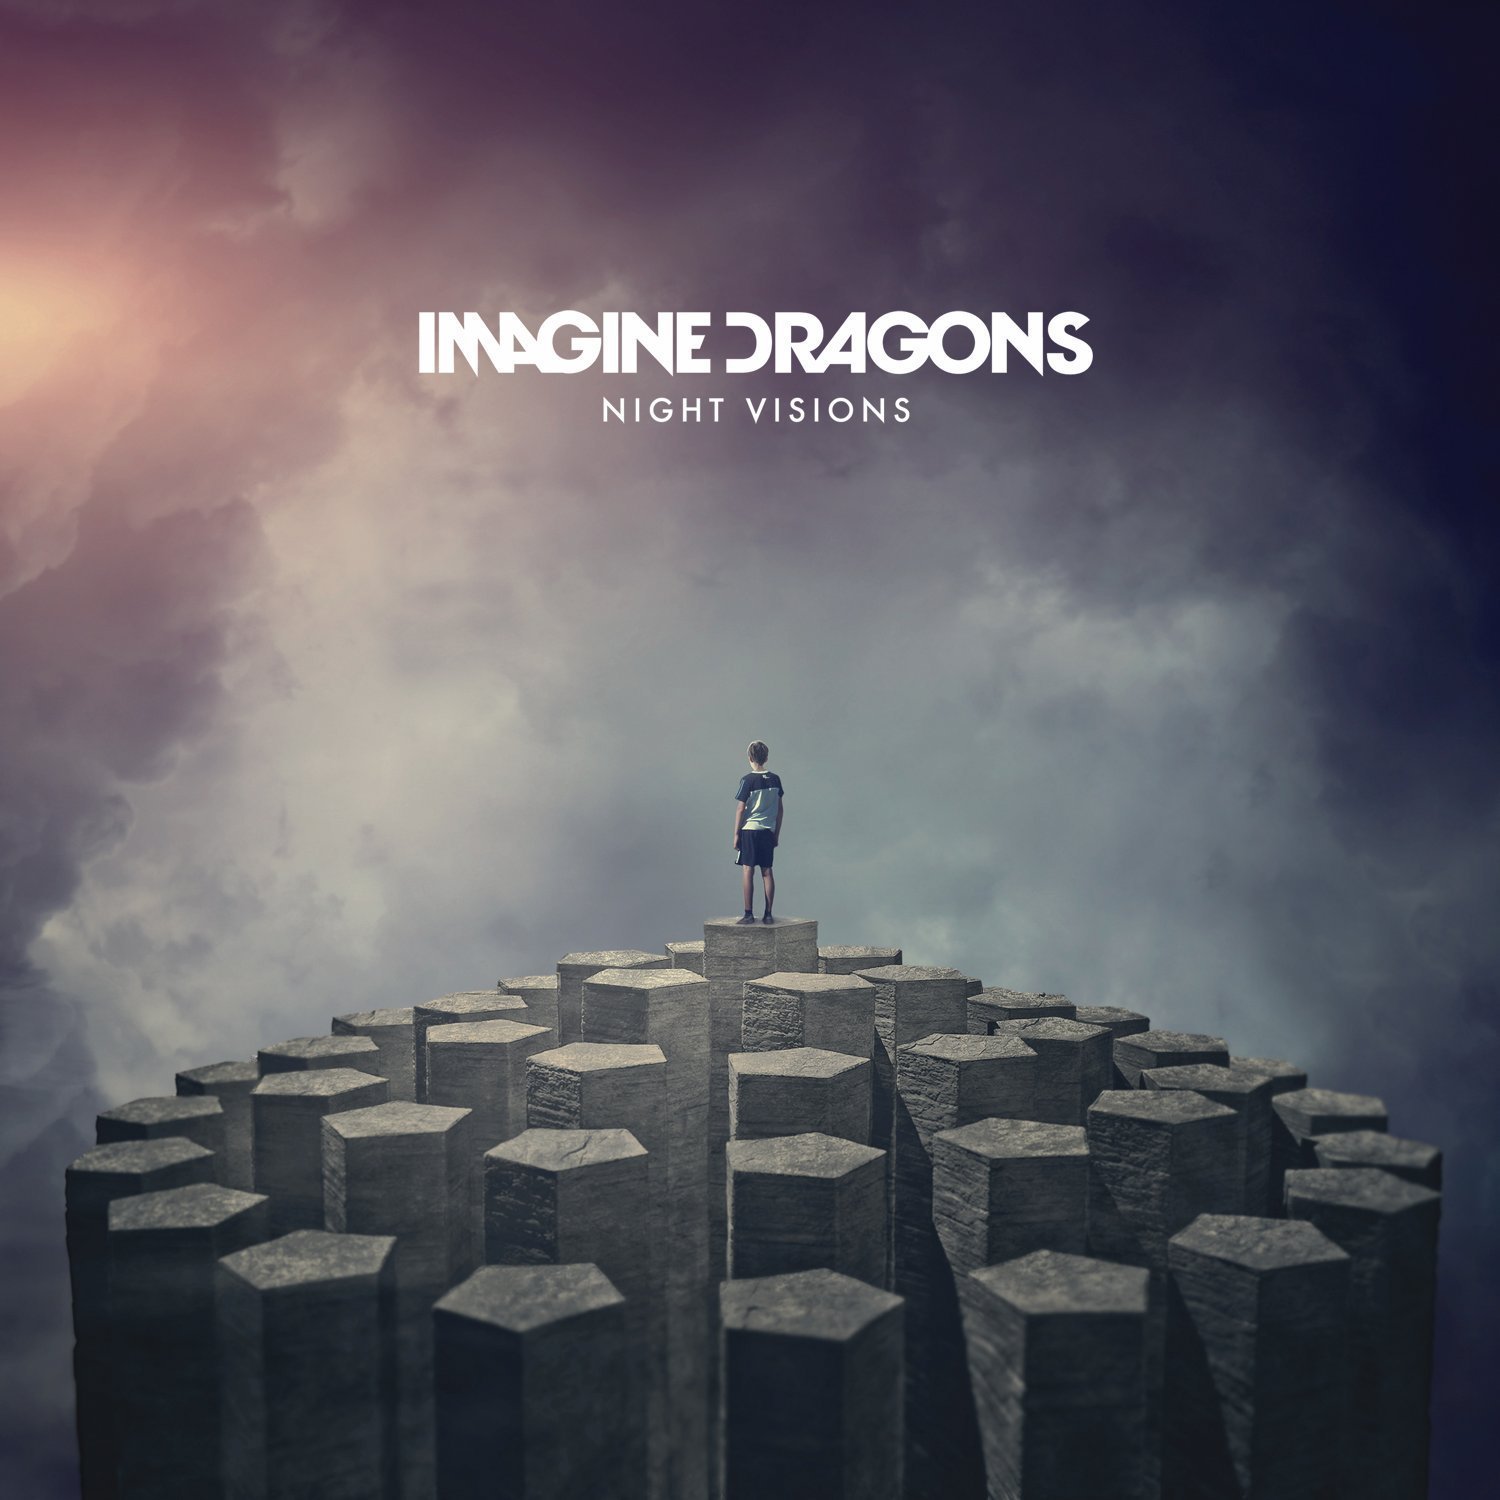 Imagine купить. Imagine Dragons Night Visions пластинка. Имеджин драгонобложка. Imagine Dragons плакат. Imagine Dragons Night Visions обложка.